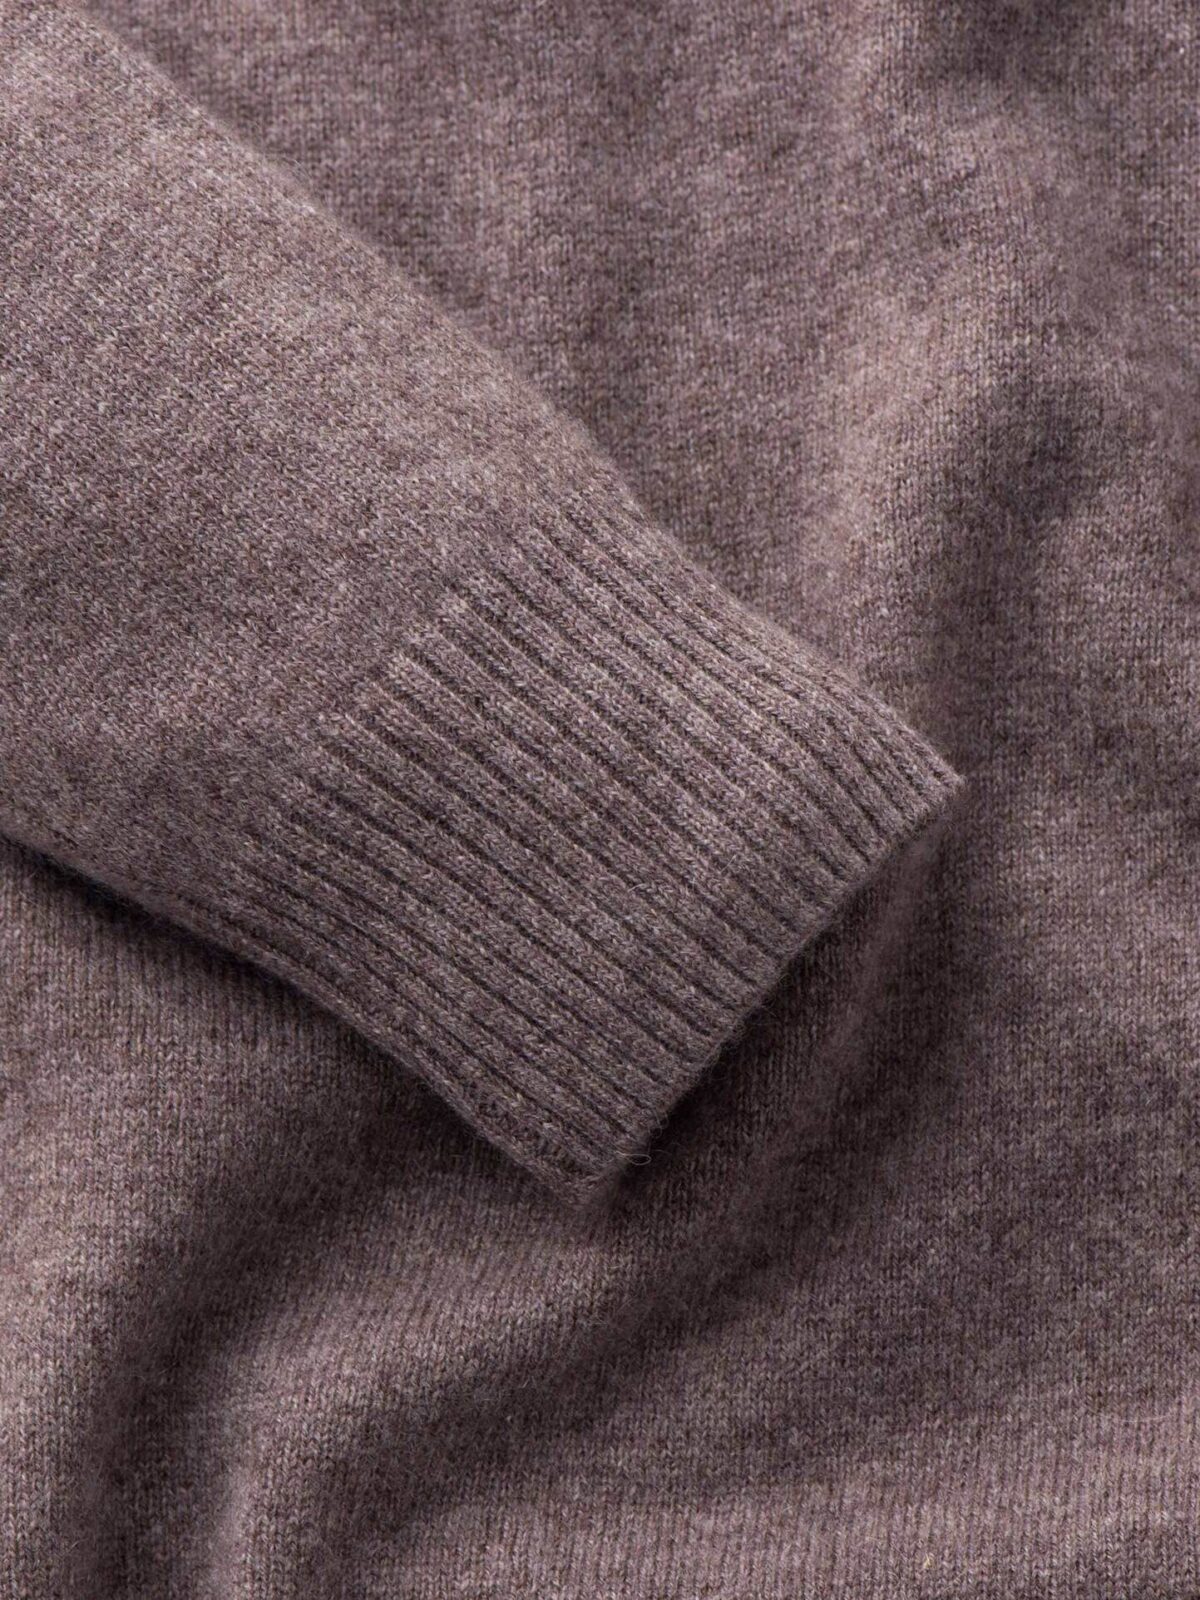 Beige Cashmere V-Neck Sweater by Proper Cloth